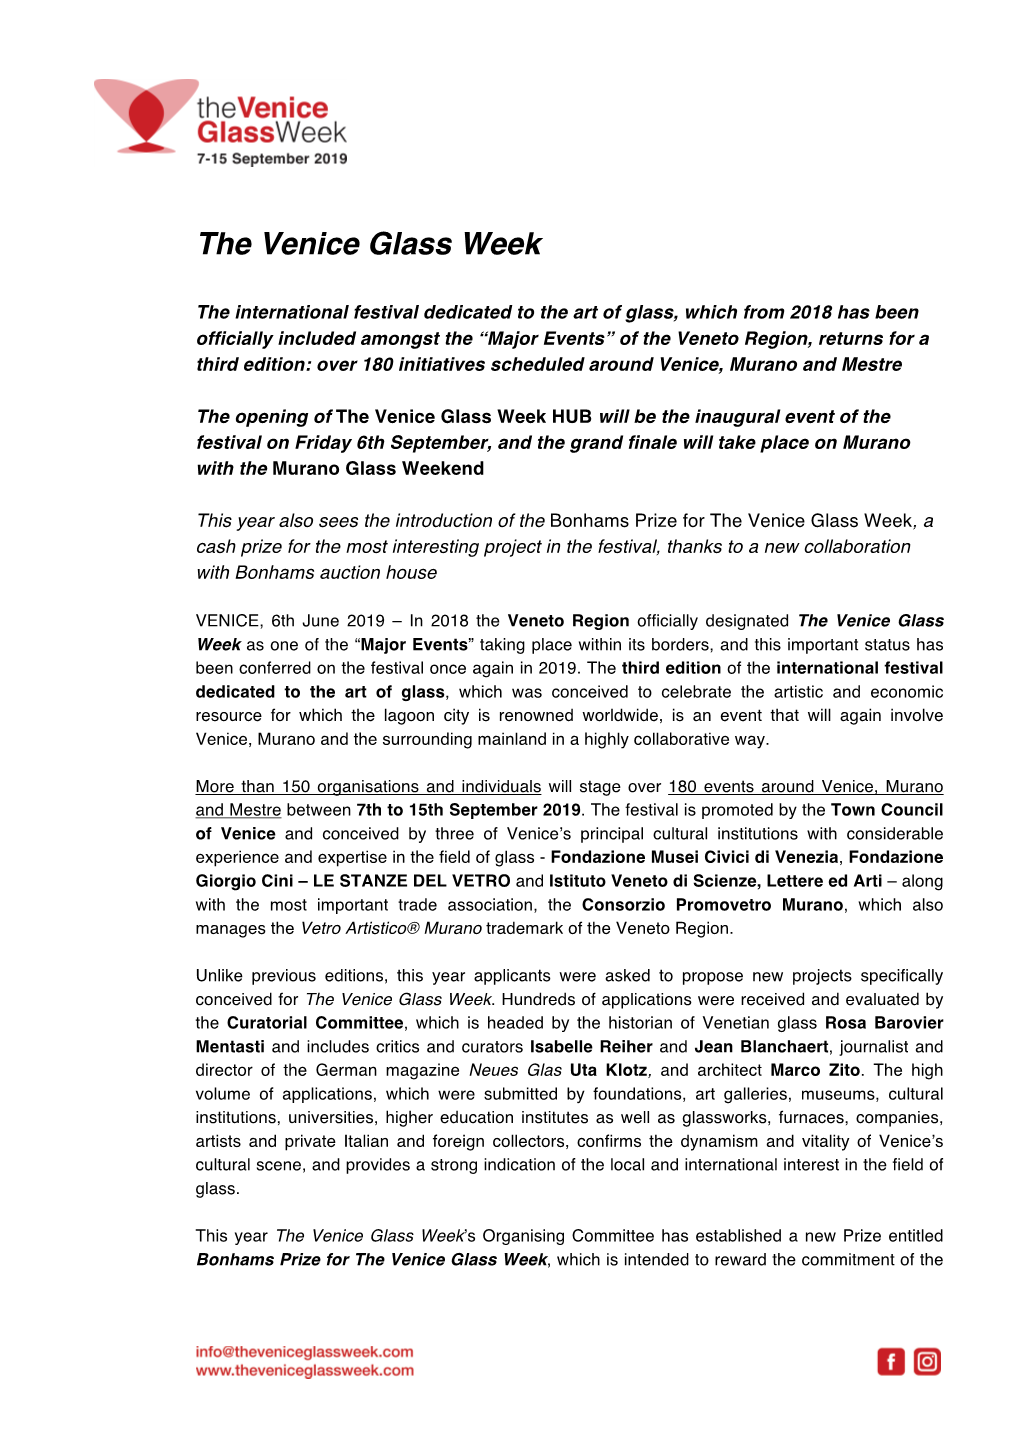 The Venice Glass Week 2019